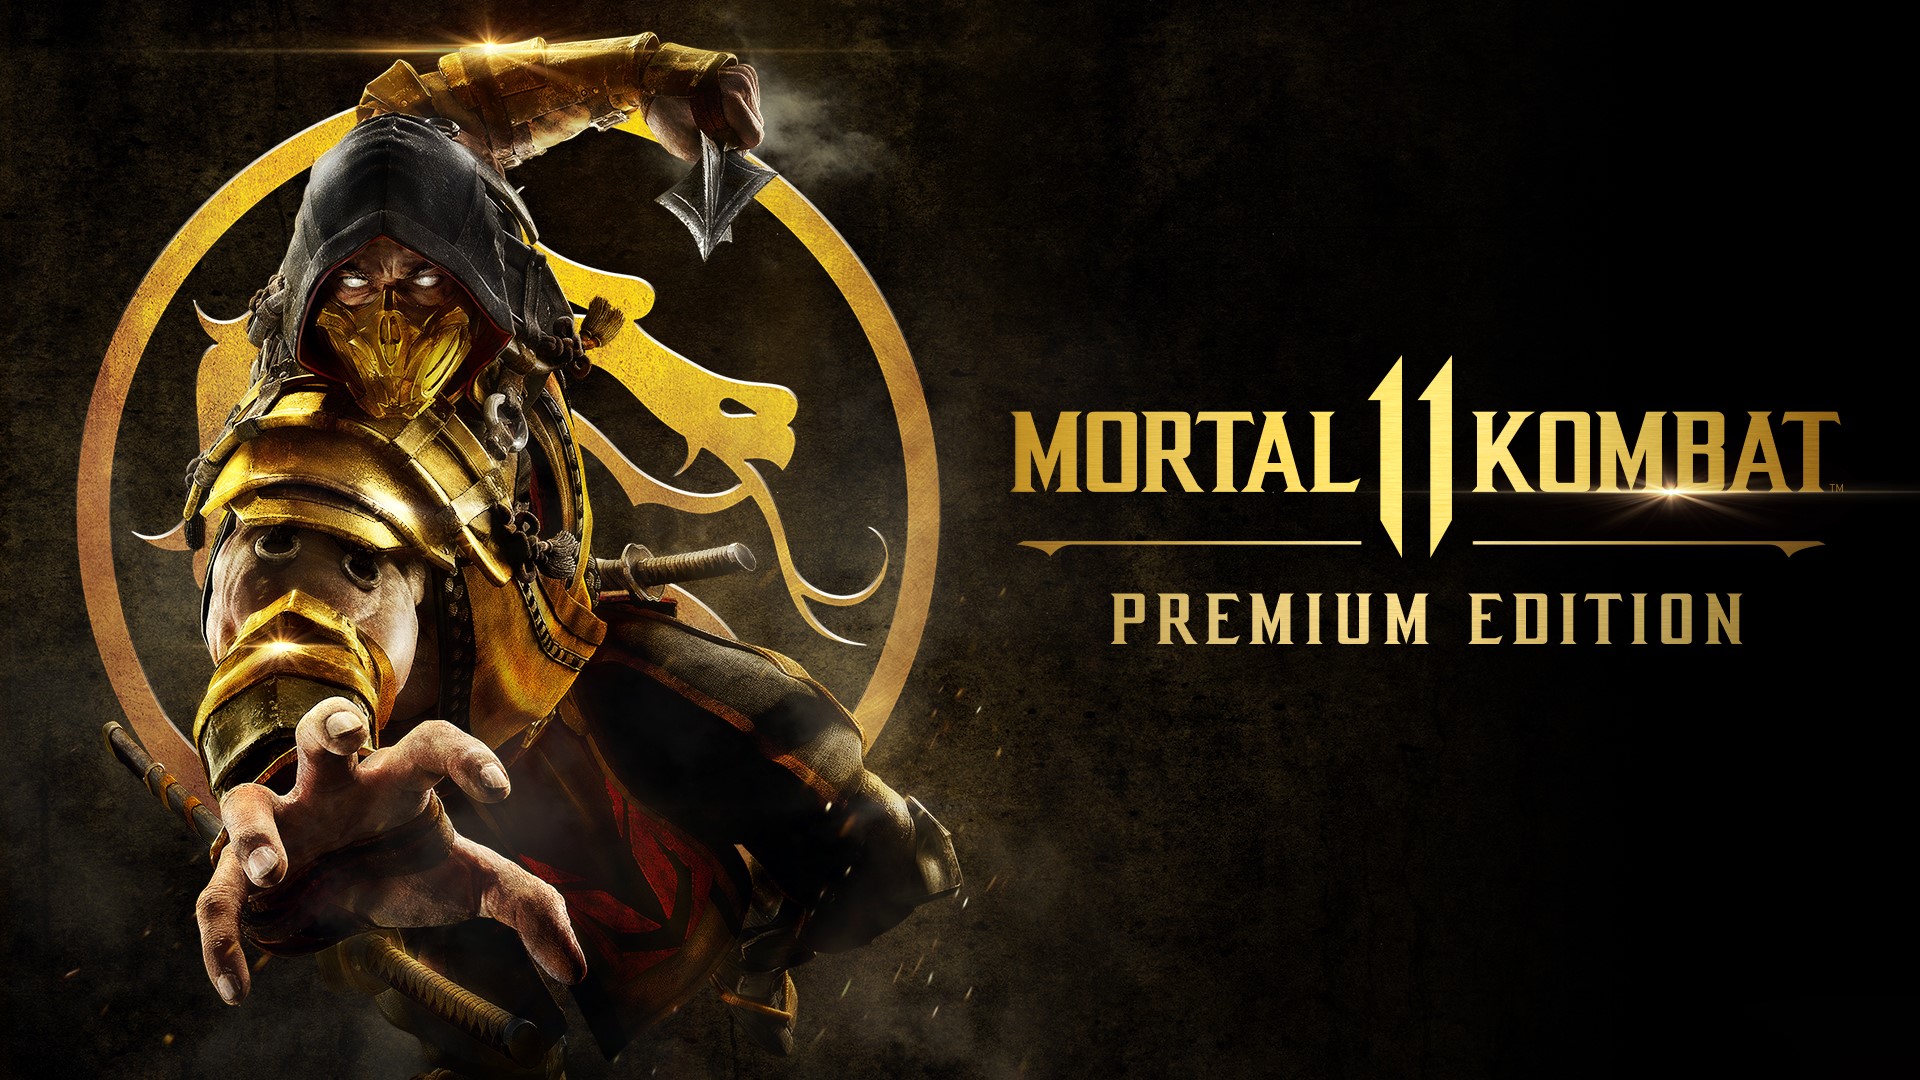 Мортал комбат 11 на пс 5. MK 11 Ultimate. Mortal Kombat 11 (ps4). Mortal Kombat 11. Premium Edition. PLAYSTATION 4 Mortal Kombat 11 обложка.